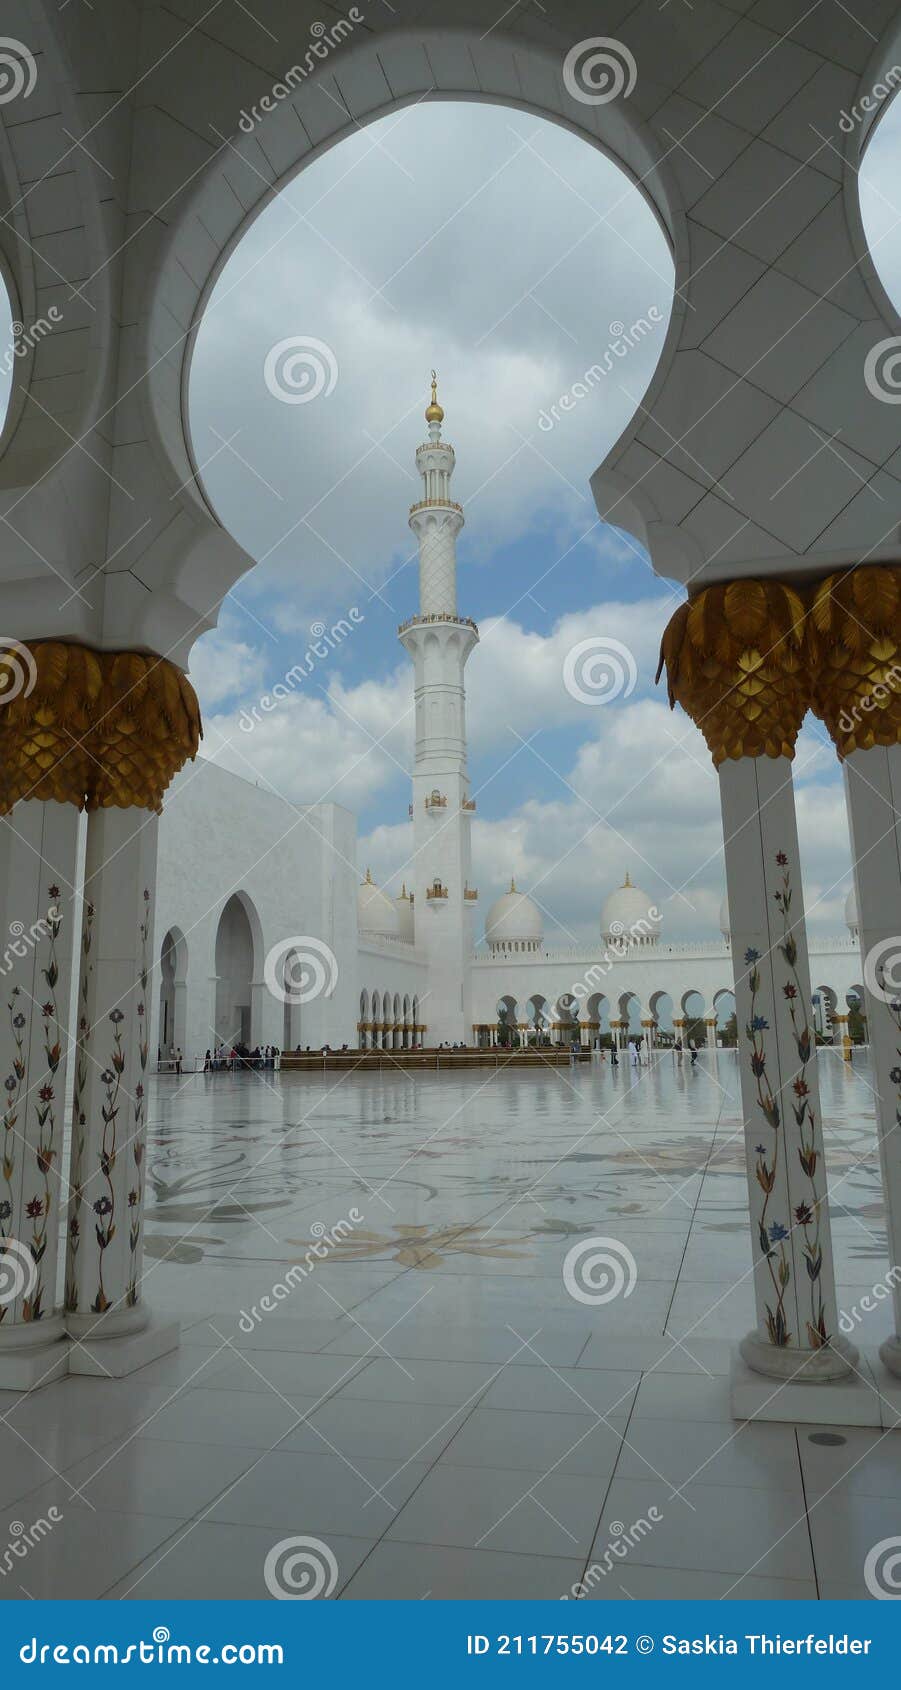 minarete of the sheikh zayed mosque